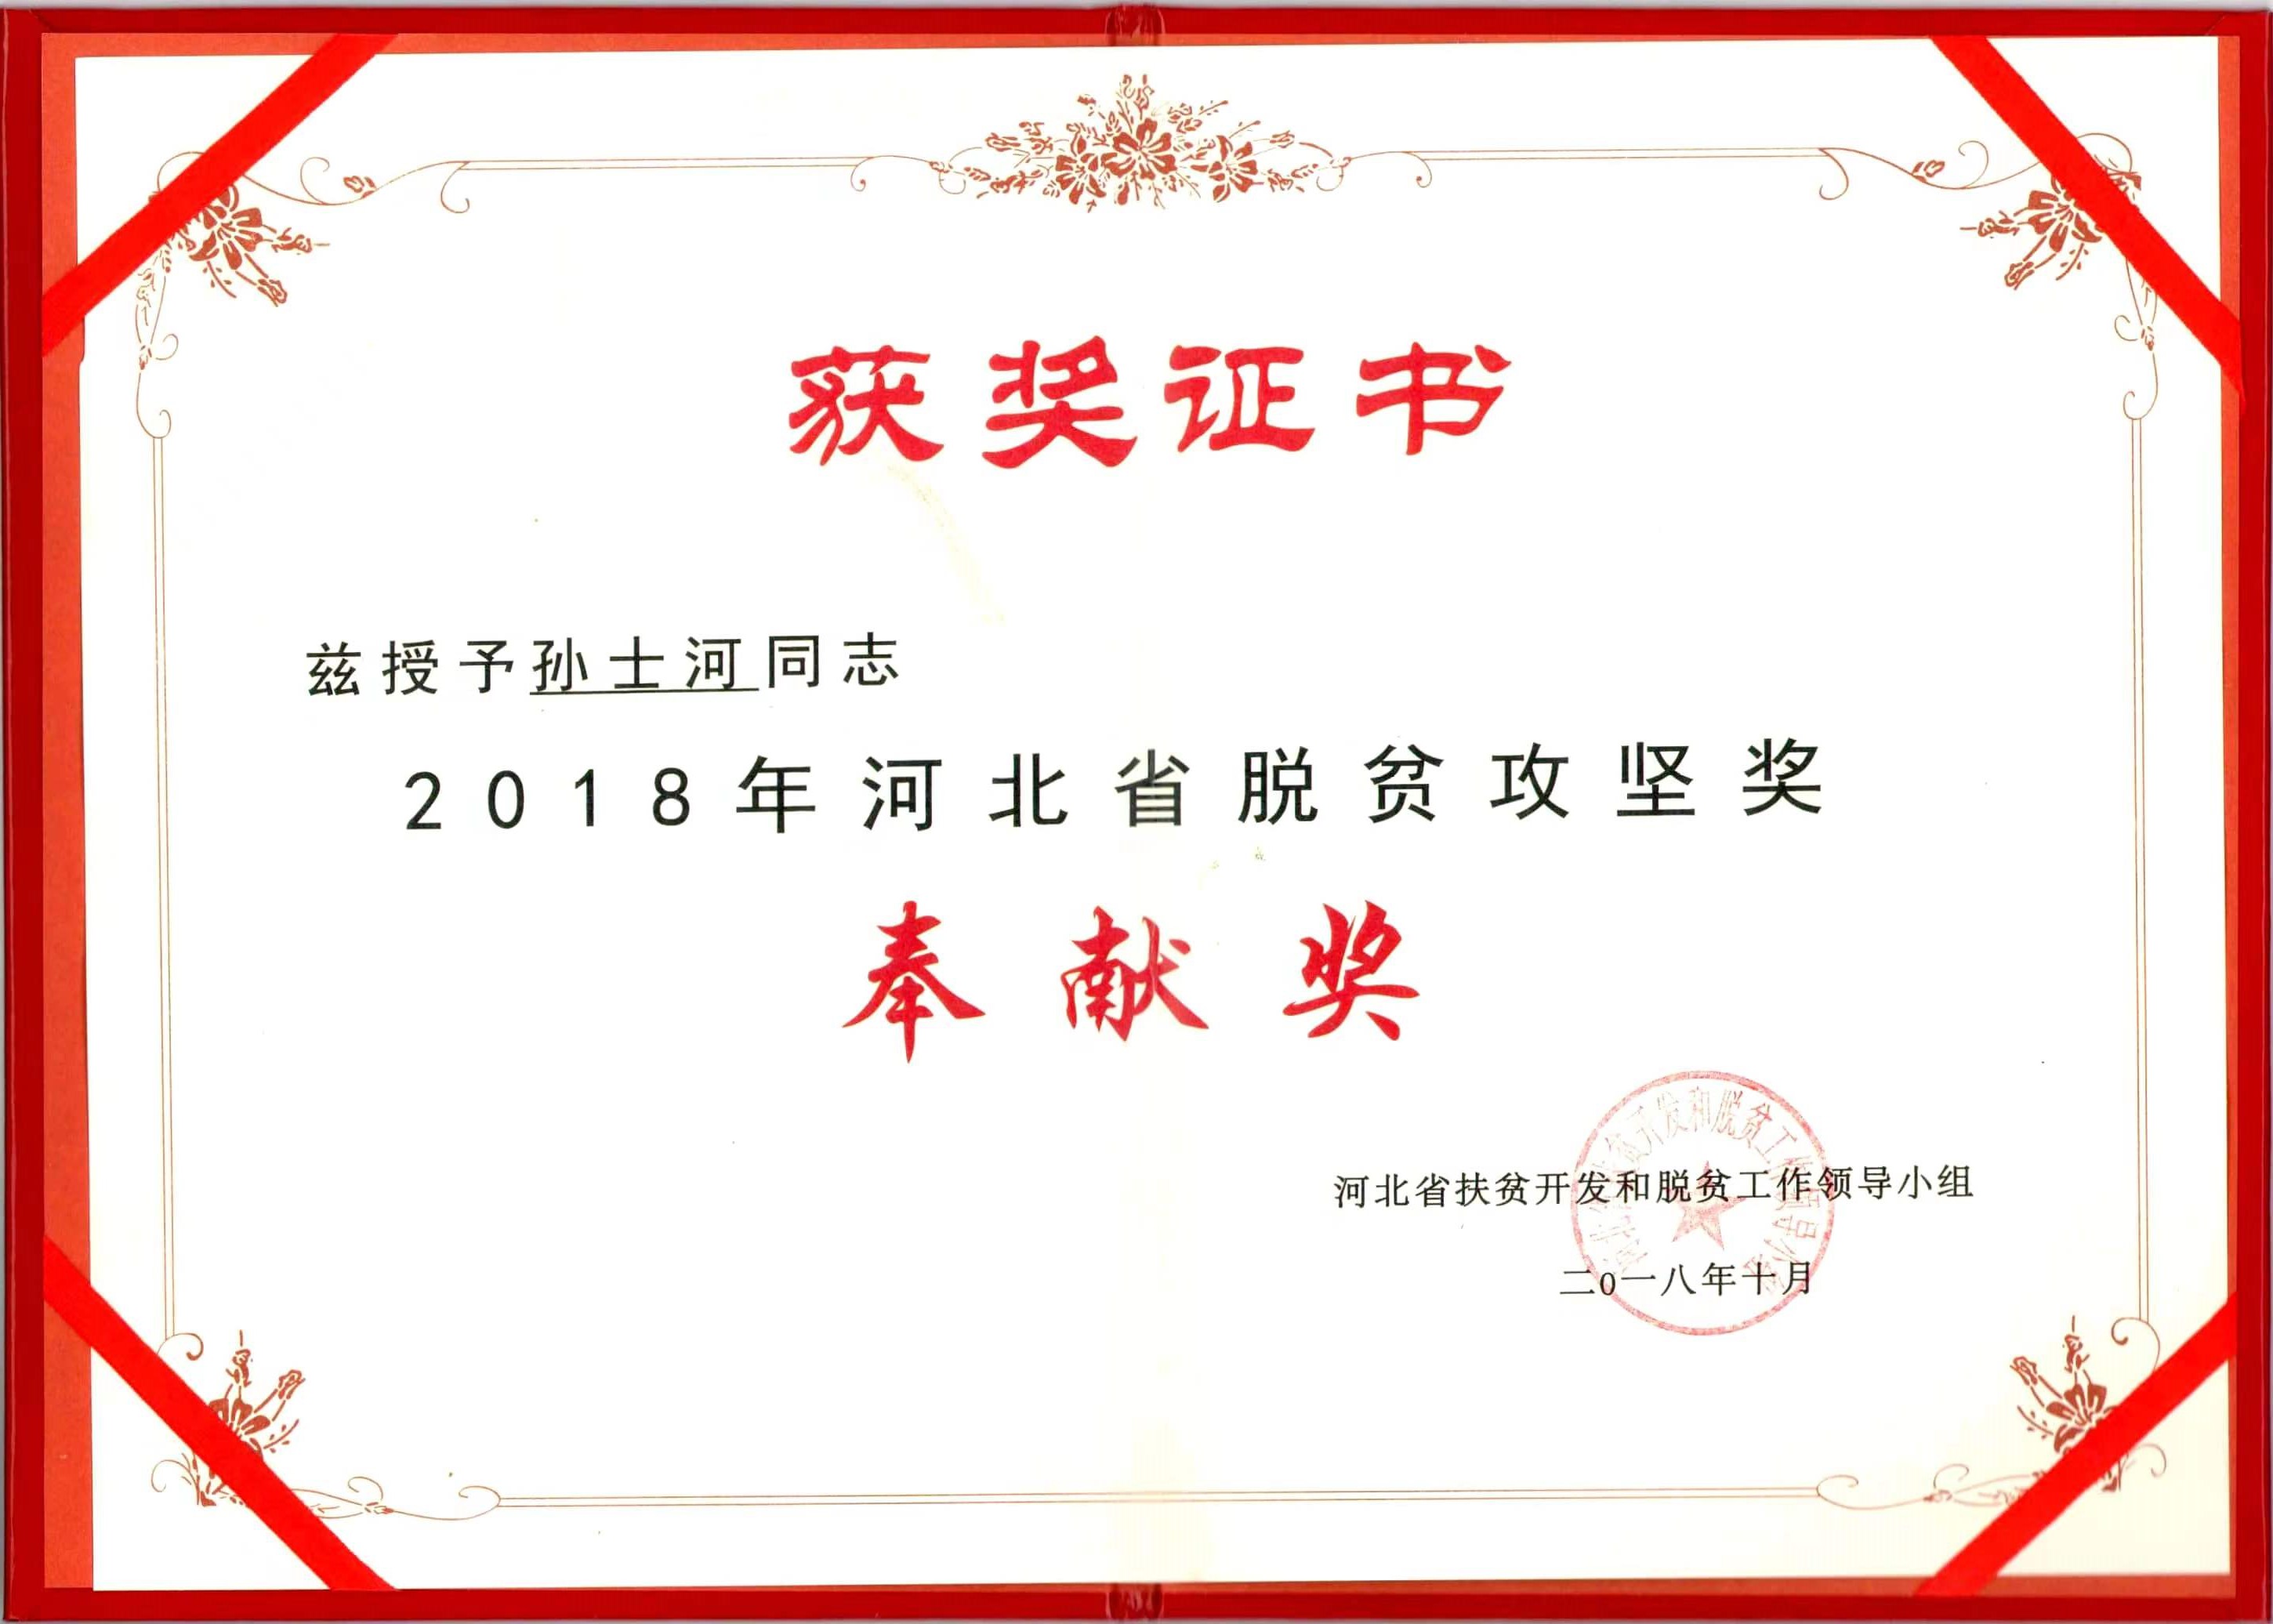 2018 Hebei Provinc